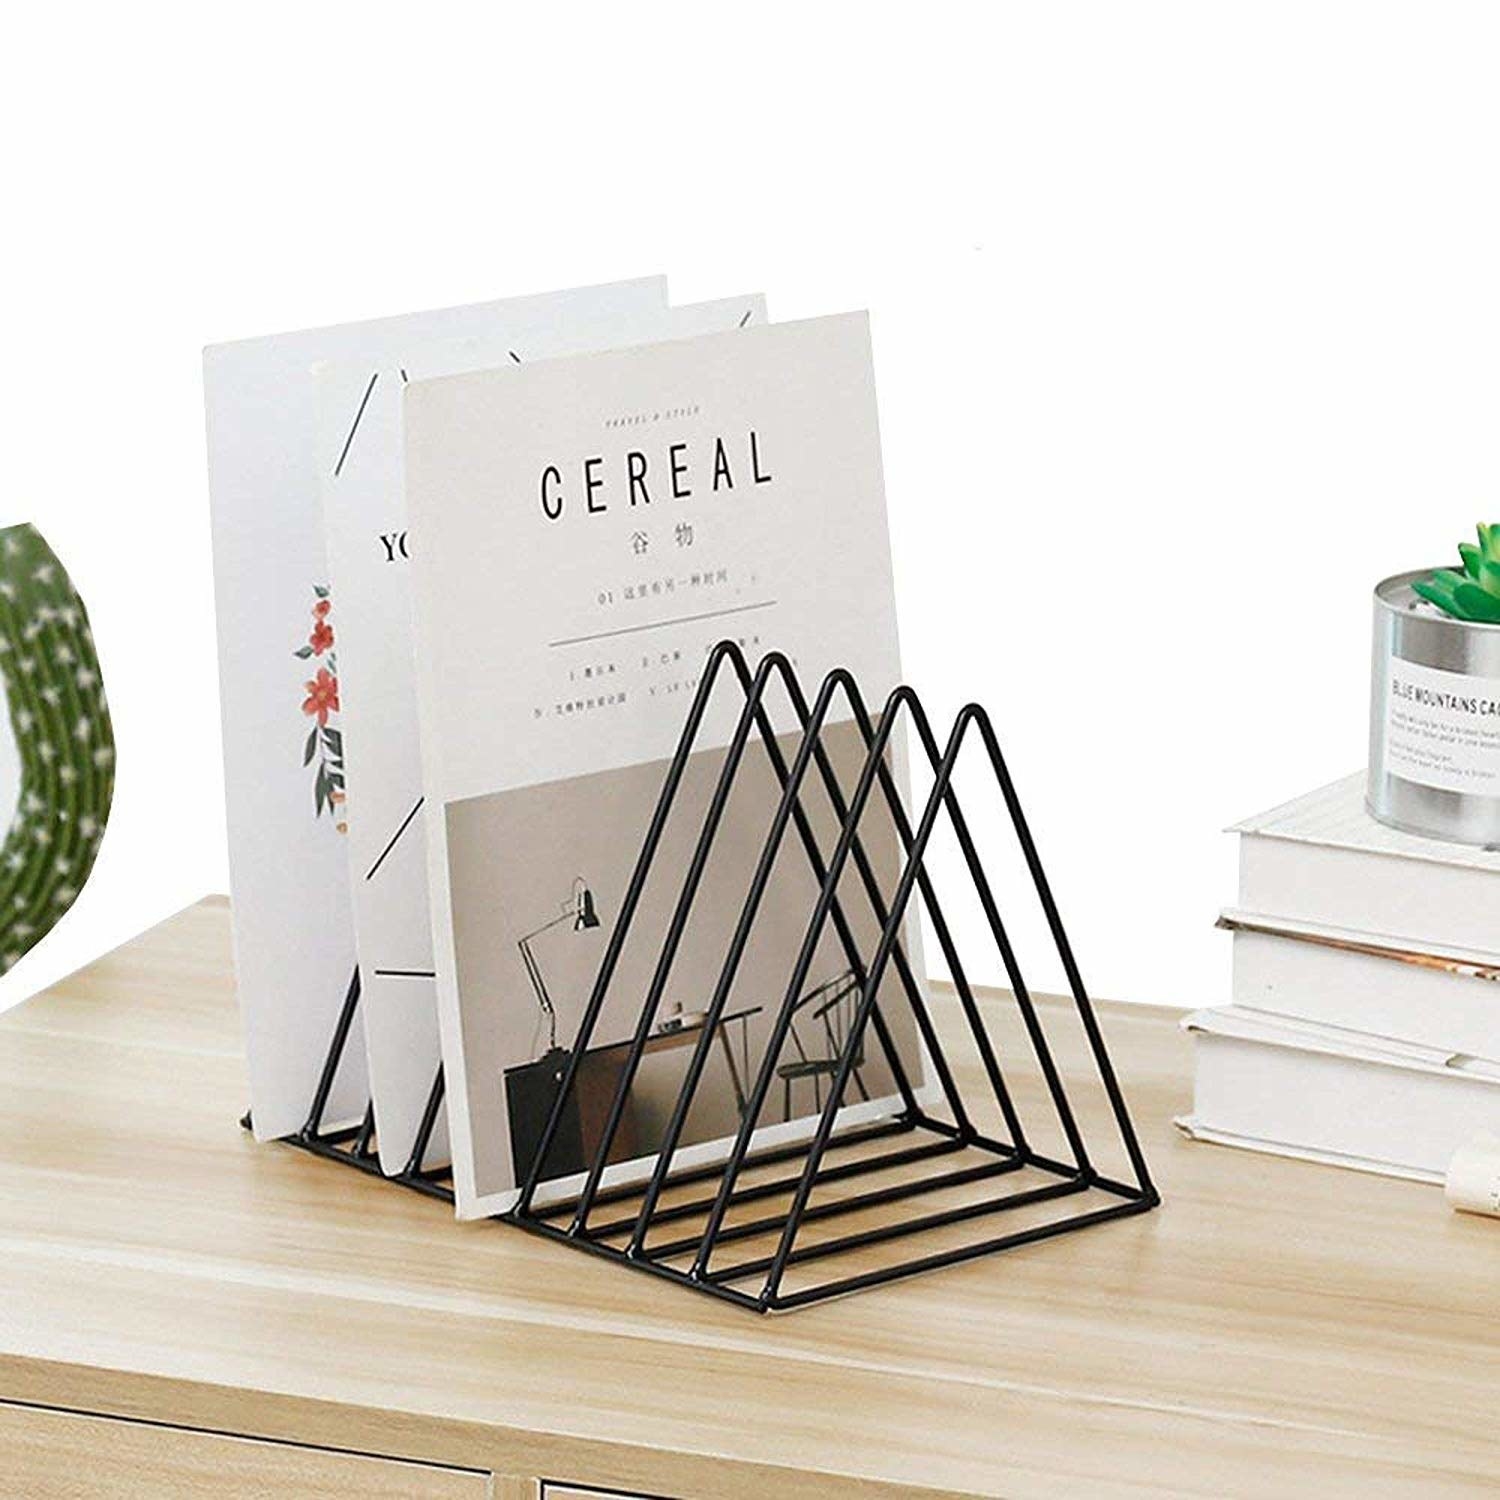 15 Minimalist Desk Accessories To Freshen Up Your Work Space